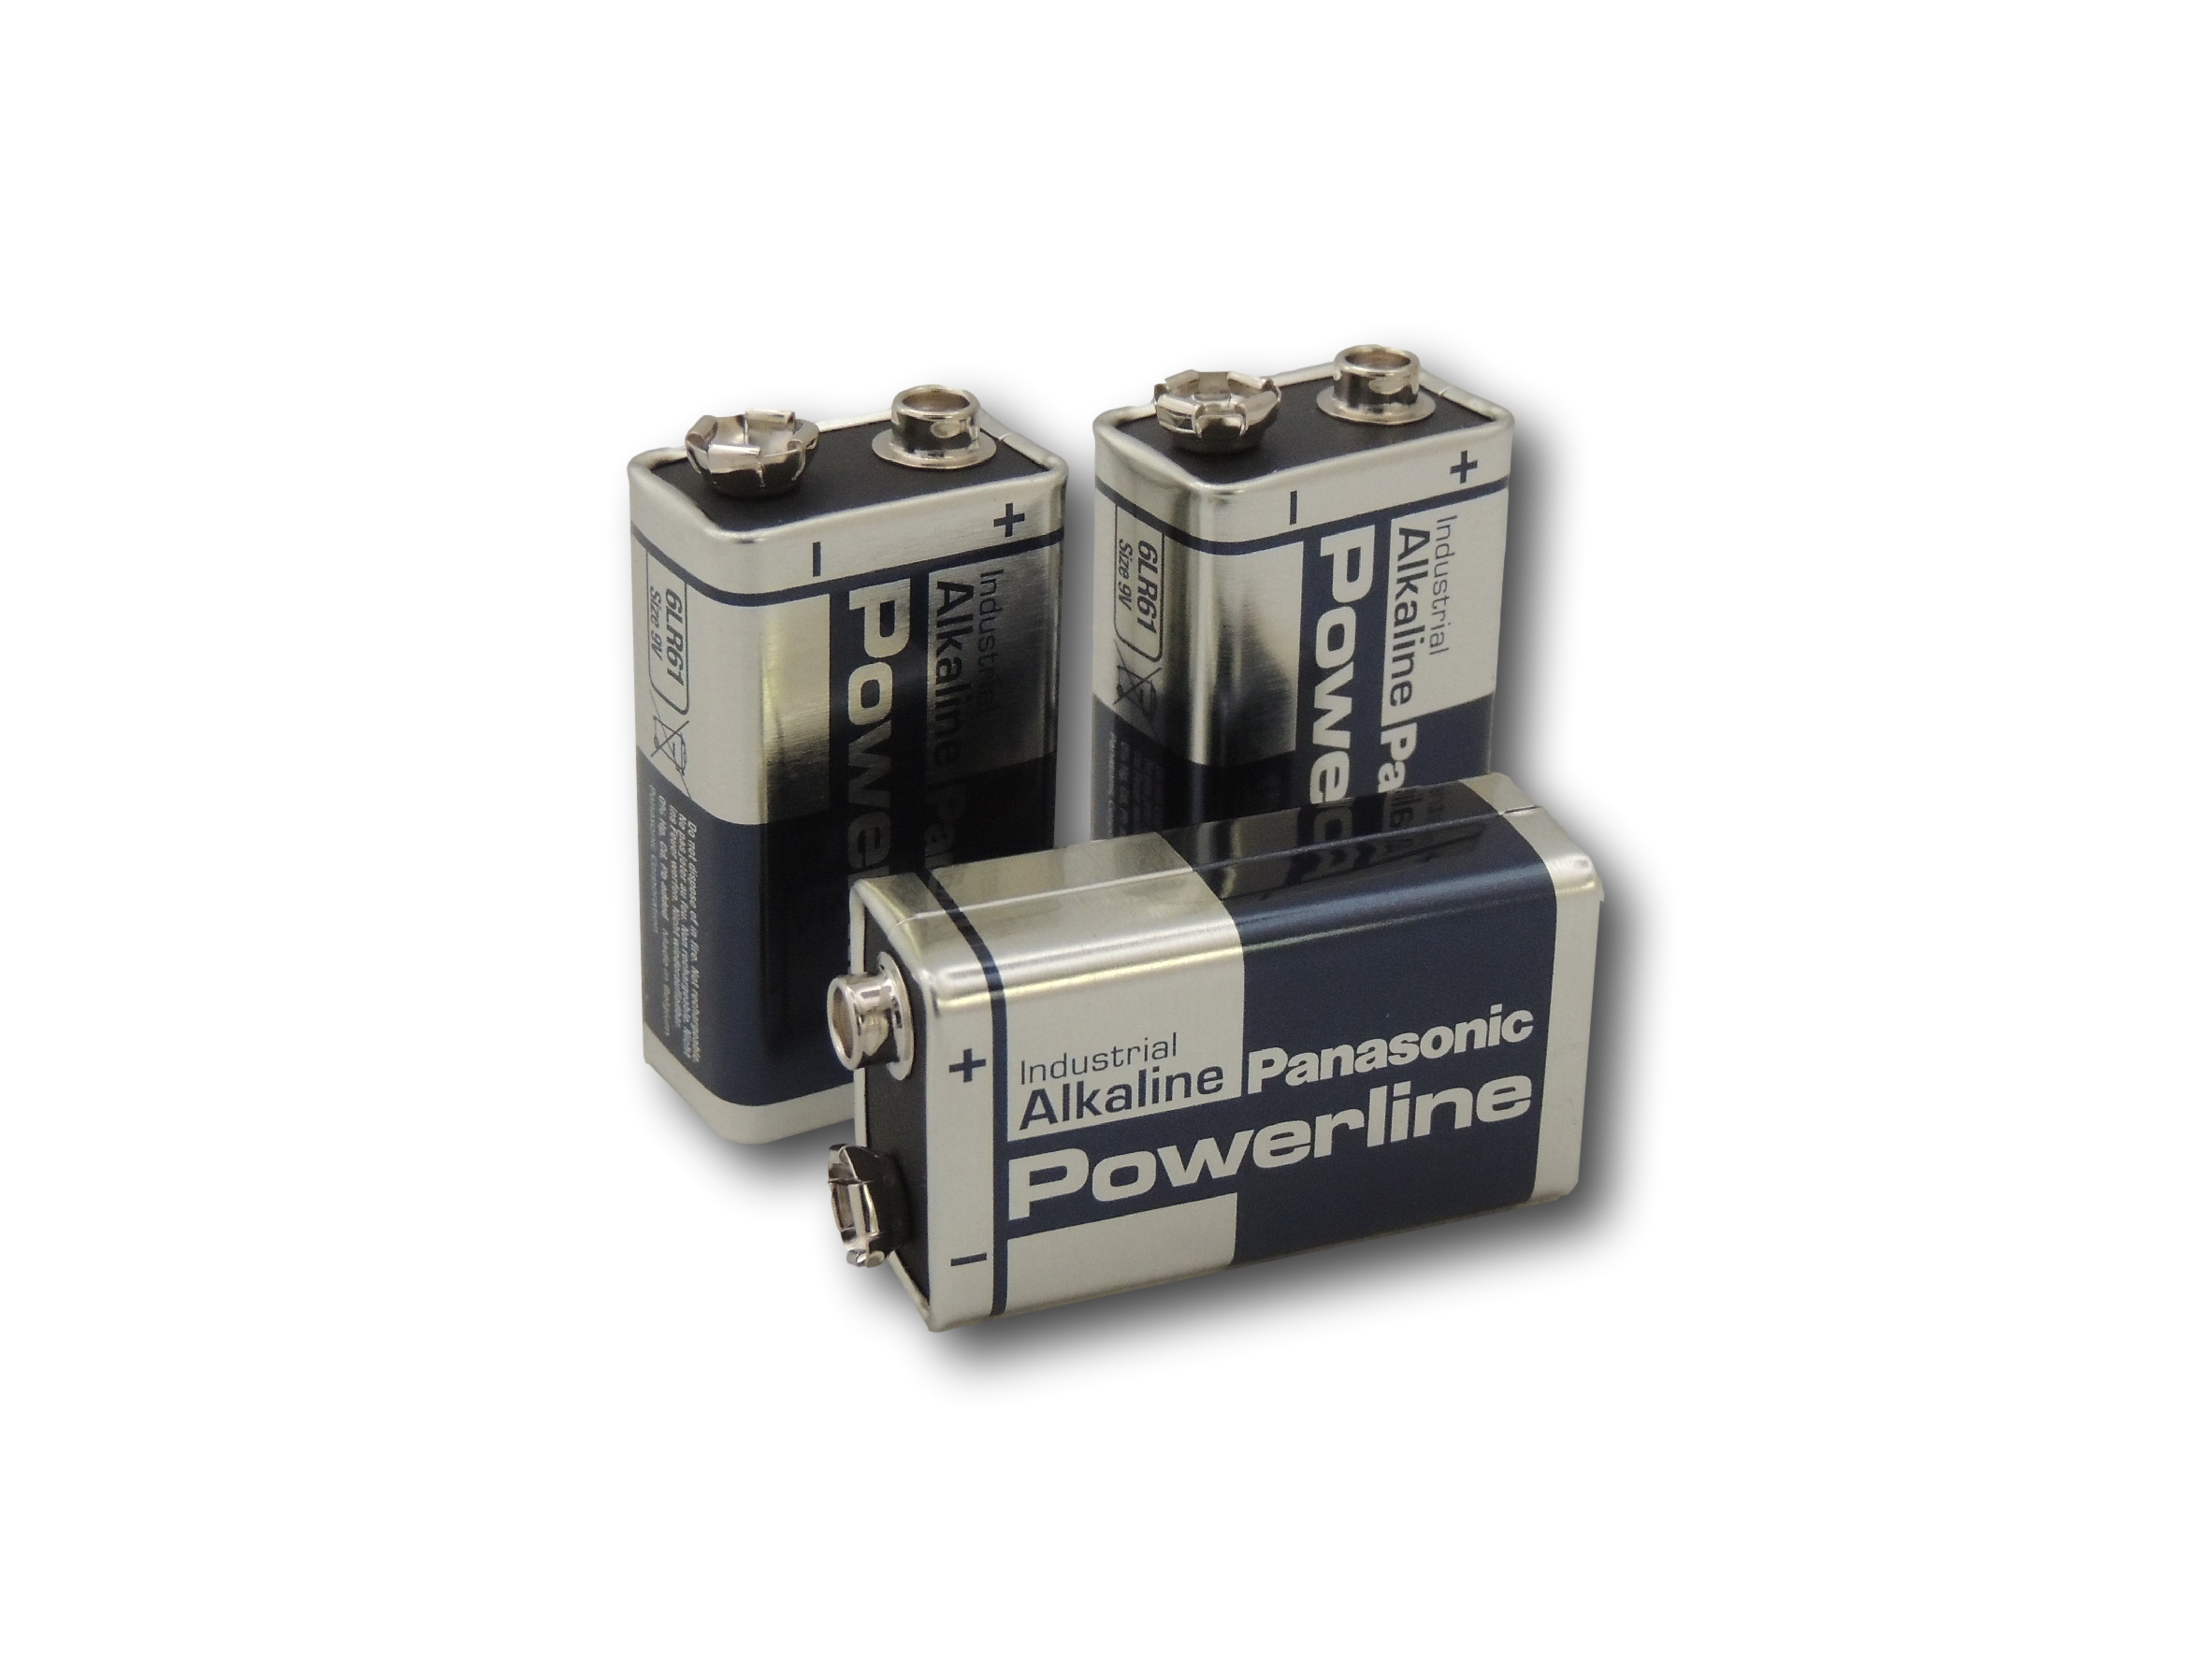 Panasonic Powerline Batteries - 9v / 6LR61